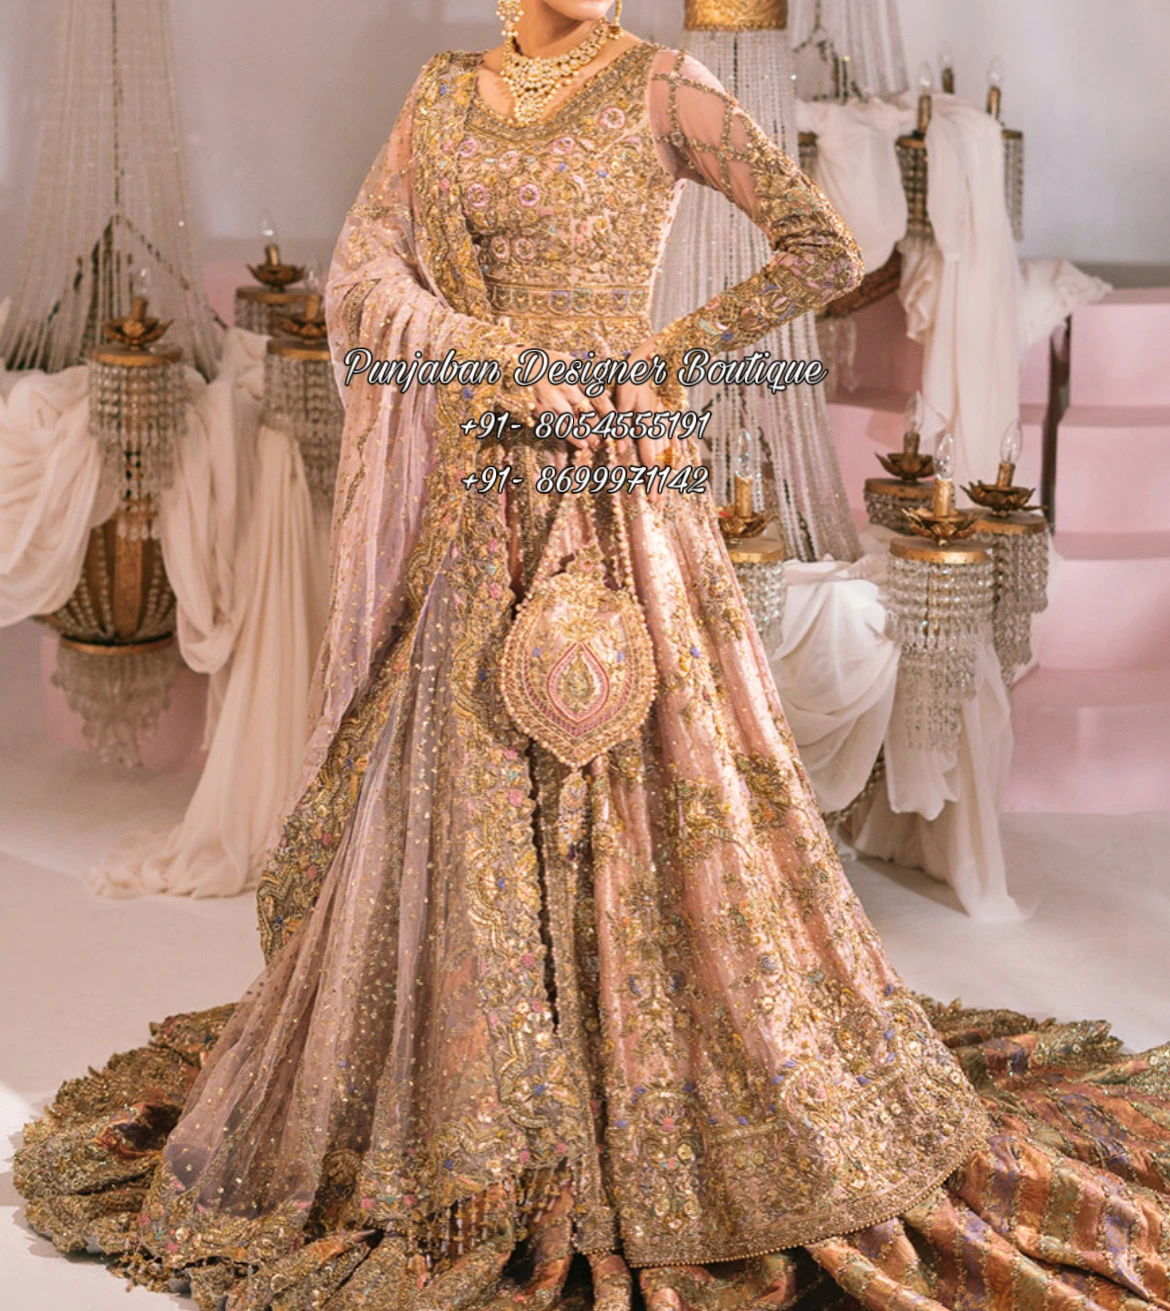 Helen Rodrigues Bridal - Luxury Designer Wedding Dresses